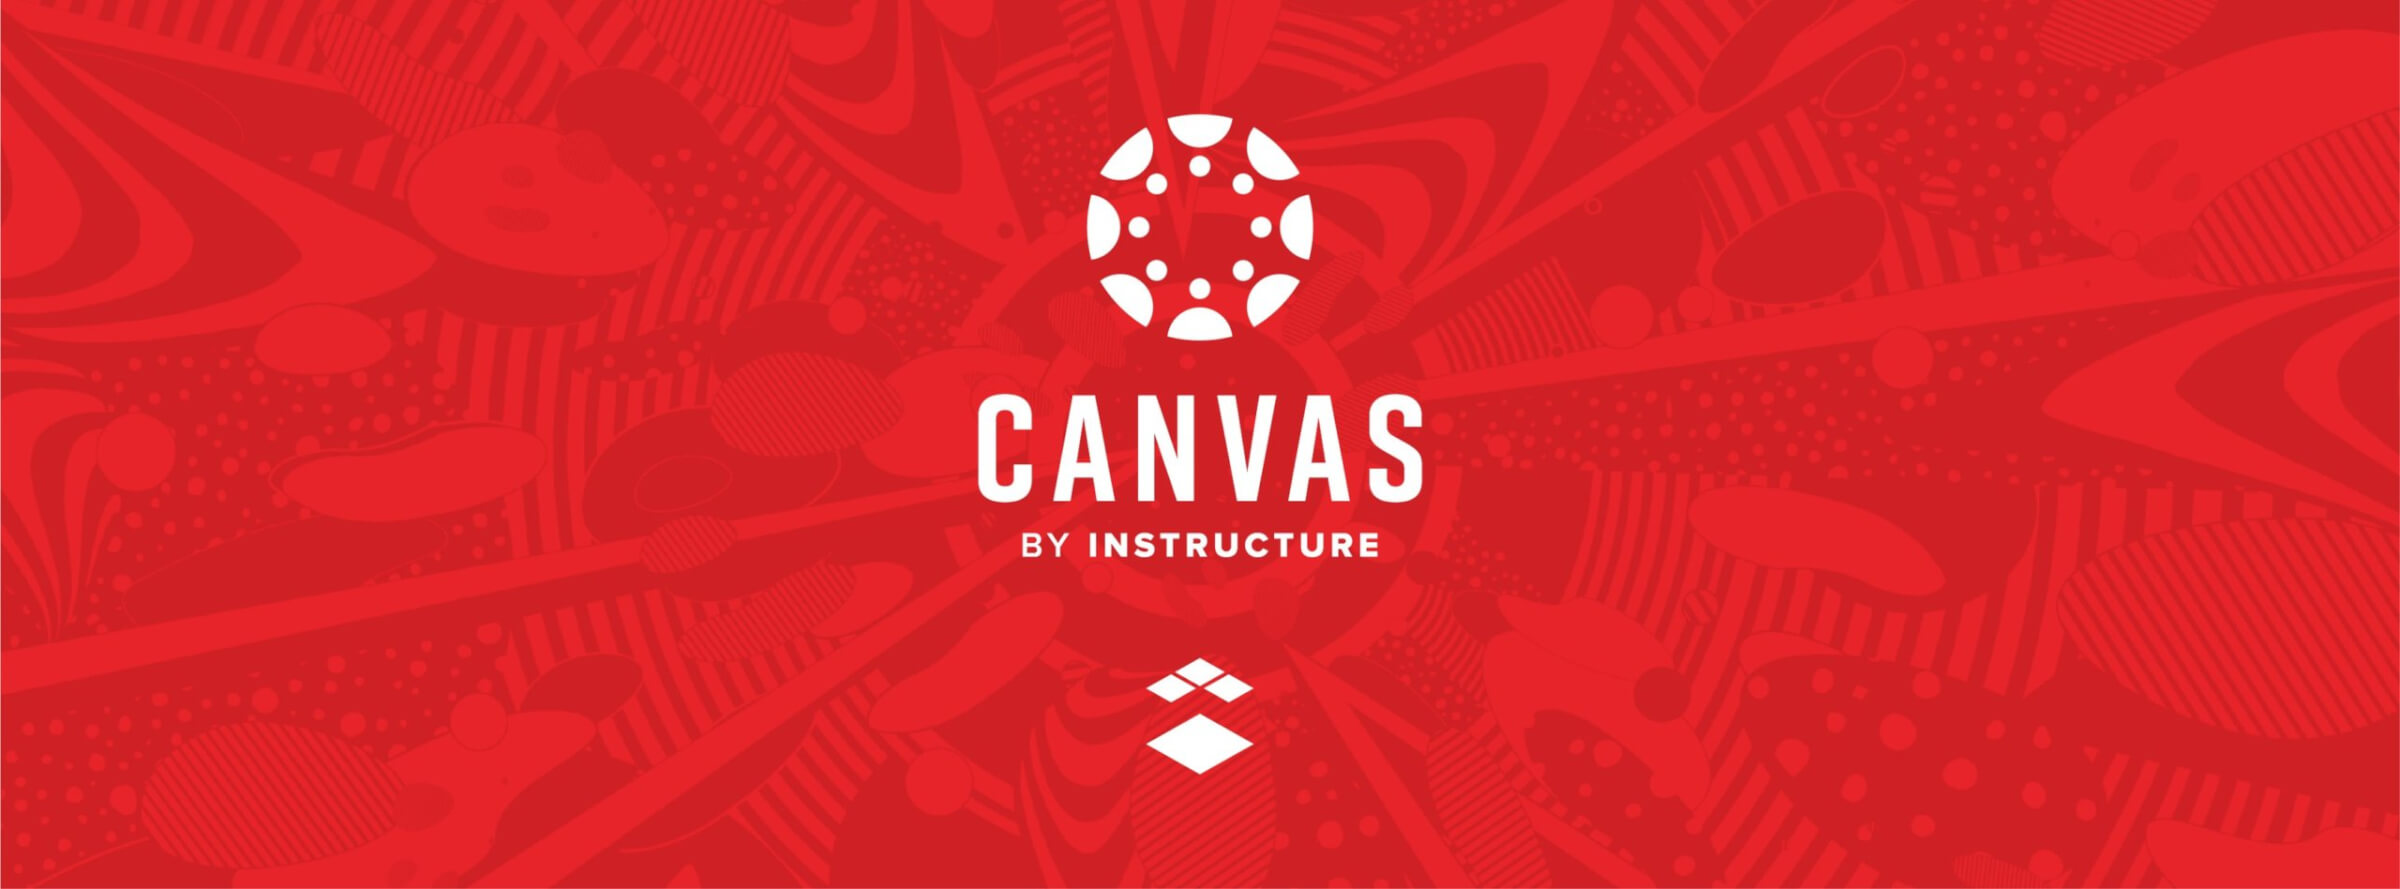 YuJa to Exhibit at Canvas’ InstructureCarn, July 24-26 in Keystone, Colorado